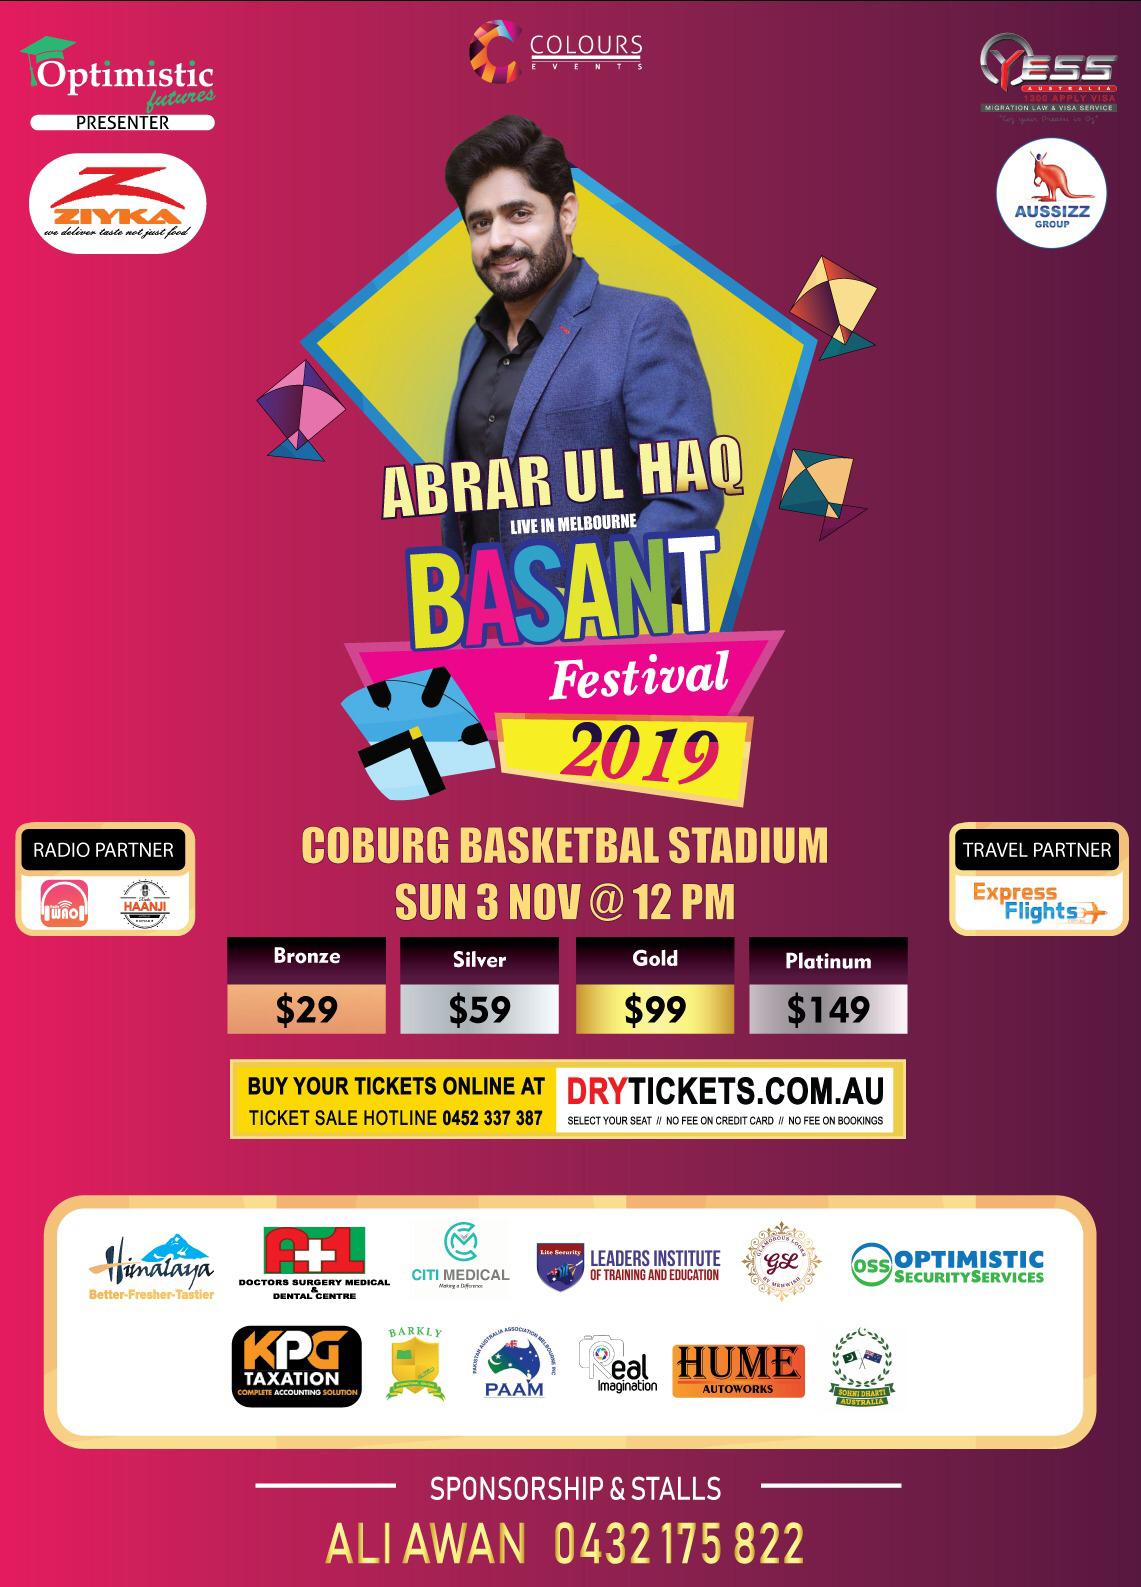 Abrar-ul-Haq Live In Concert Melbourne 2019